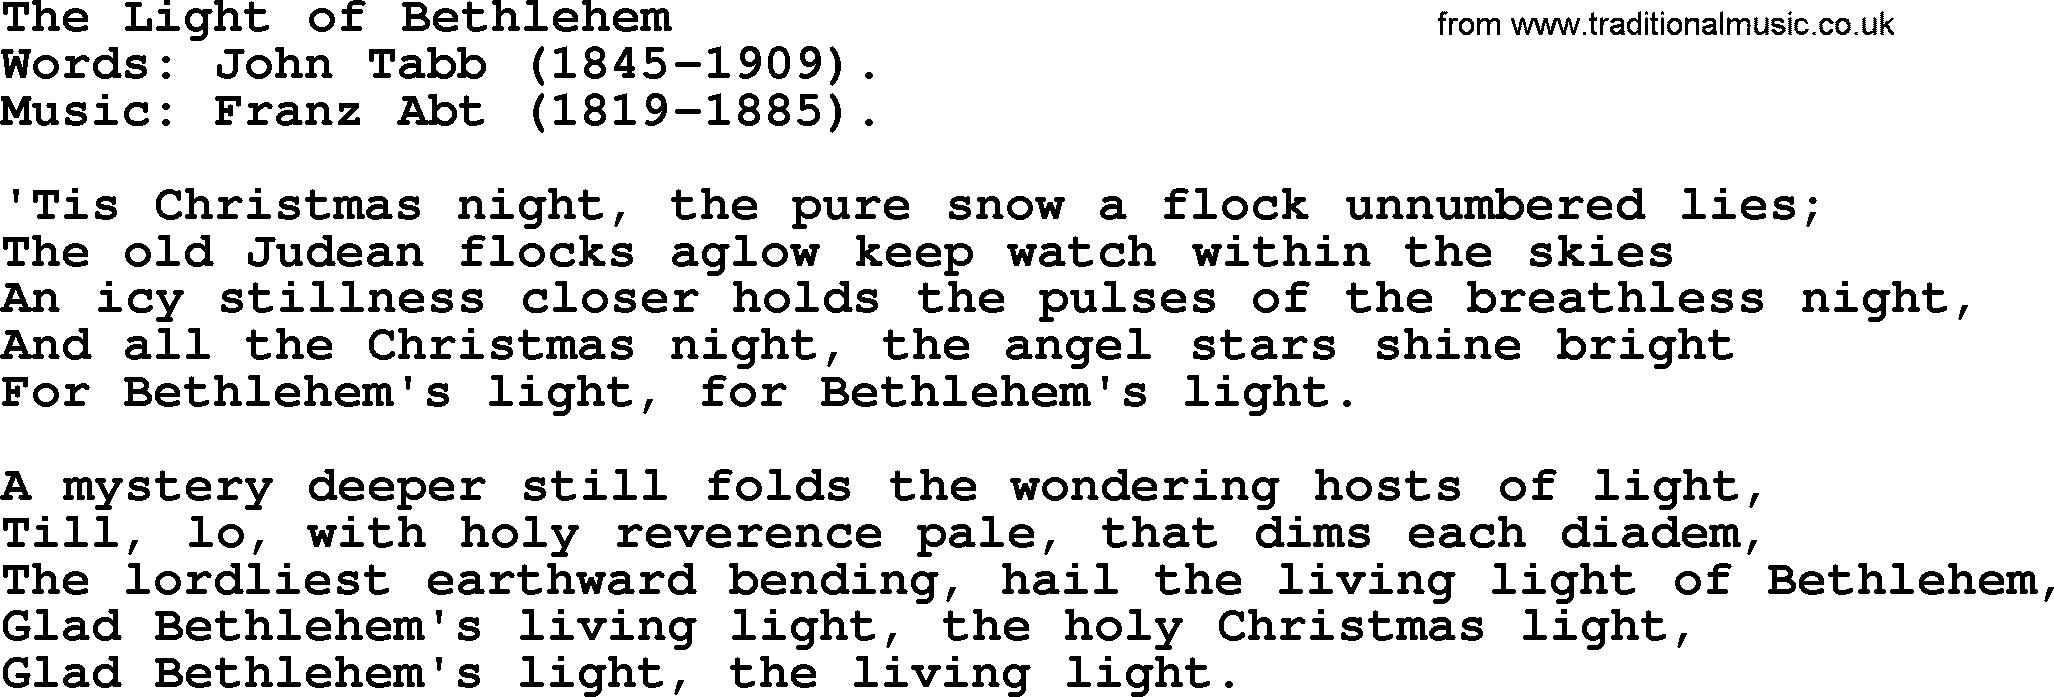 Christmas Hymns, Carols and Songs, title: The Light Of Bethlehem, lyrics with PDF